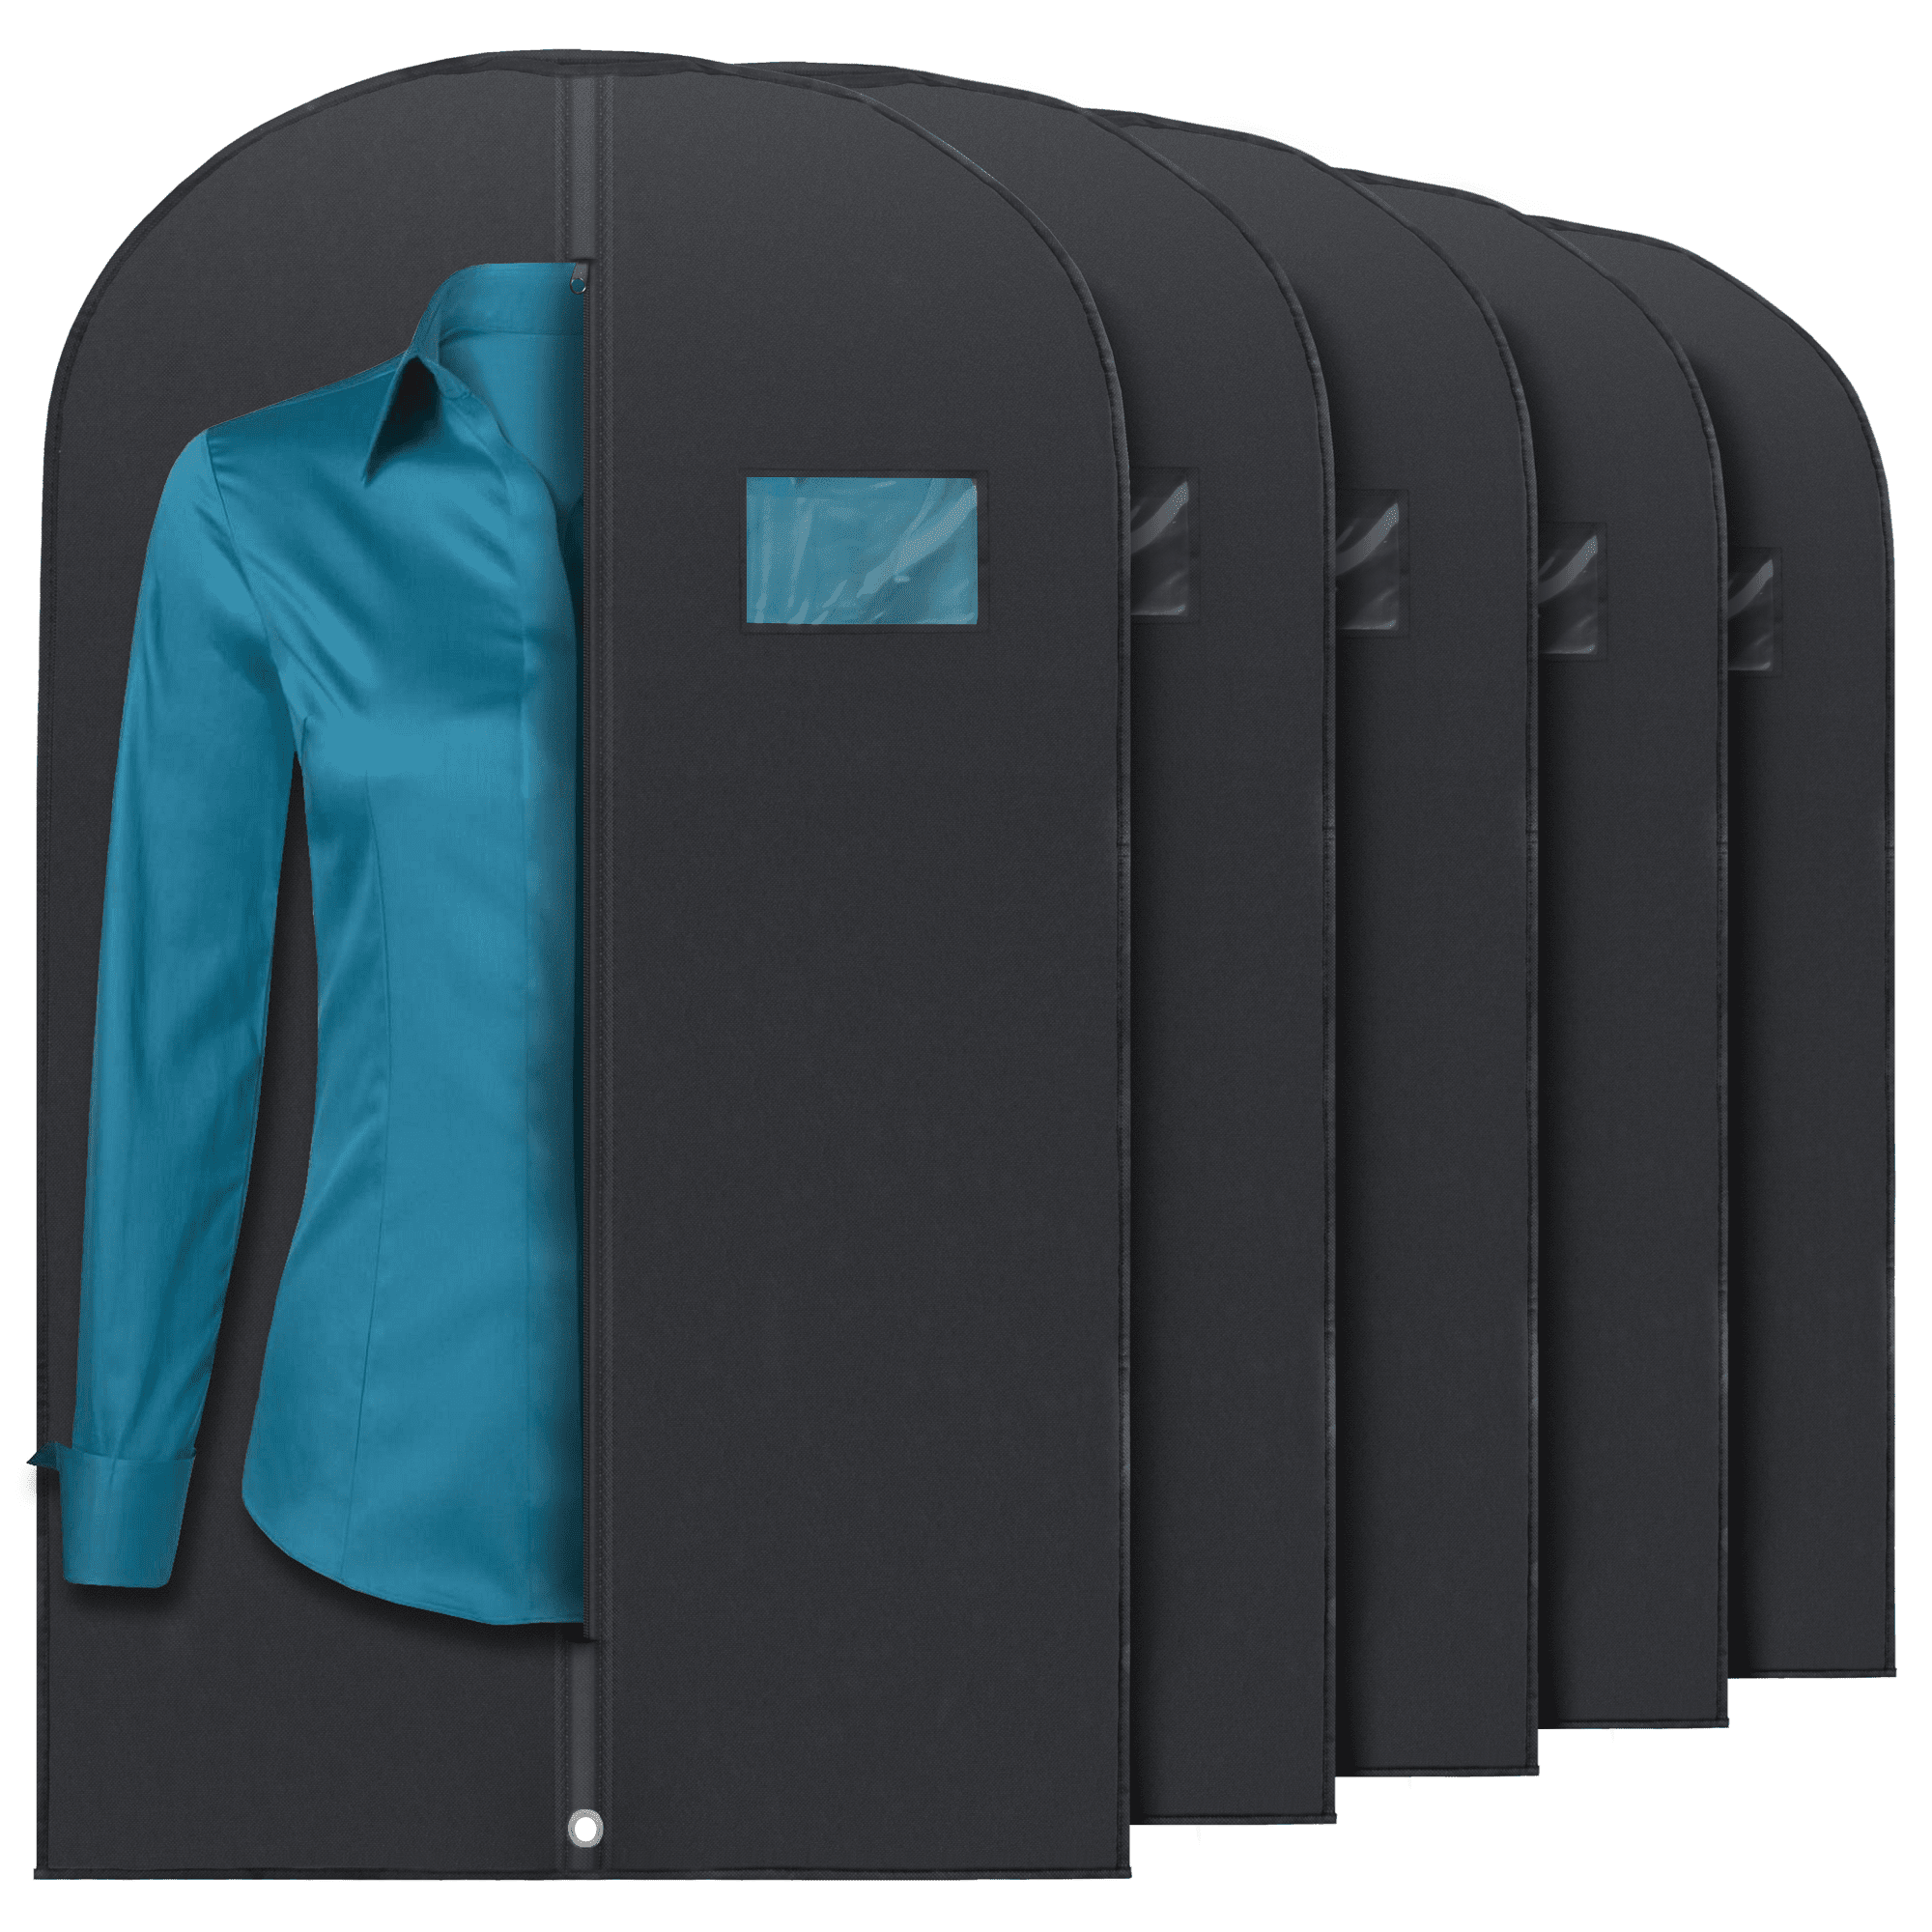 10x Clothes Garment Dustproof Cover Suit Coat Dress Hanging Storage Protector US 